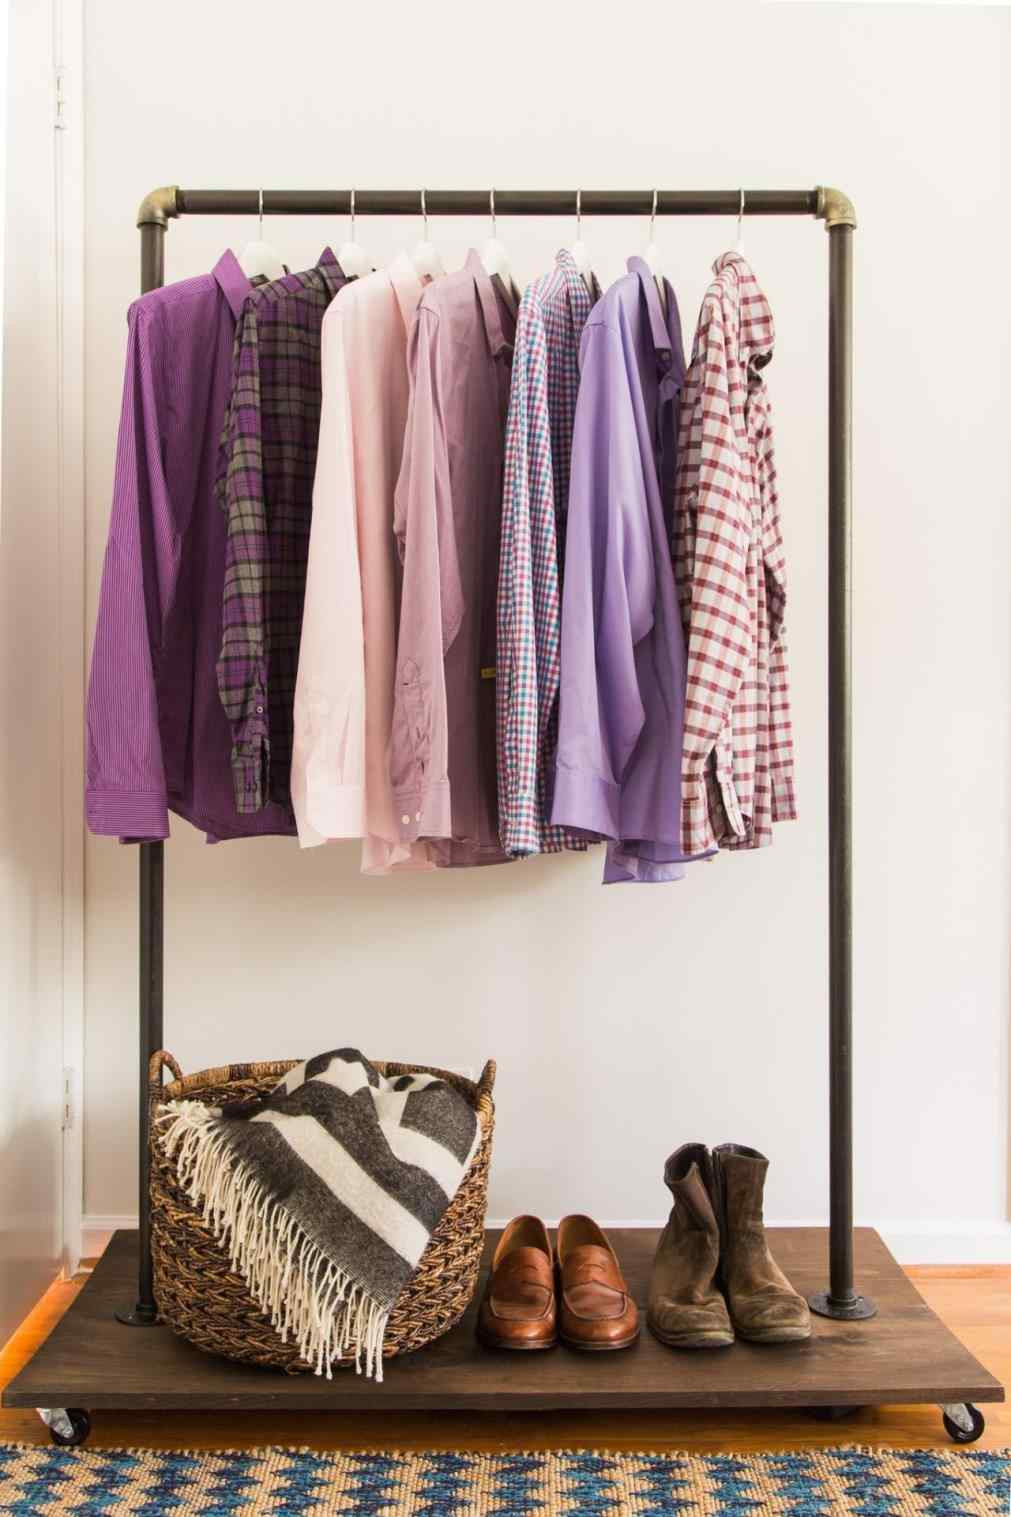 Best ideas about DIY Clothes Rack Cheap
. Save or Pin Diy Clothes Rack Cheap Now.